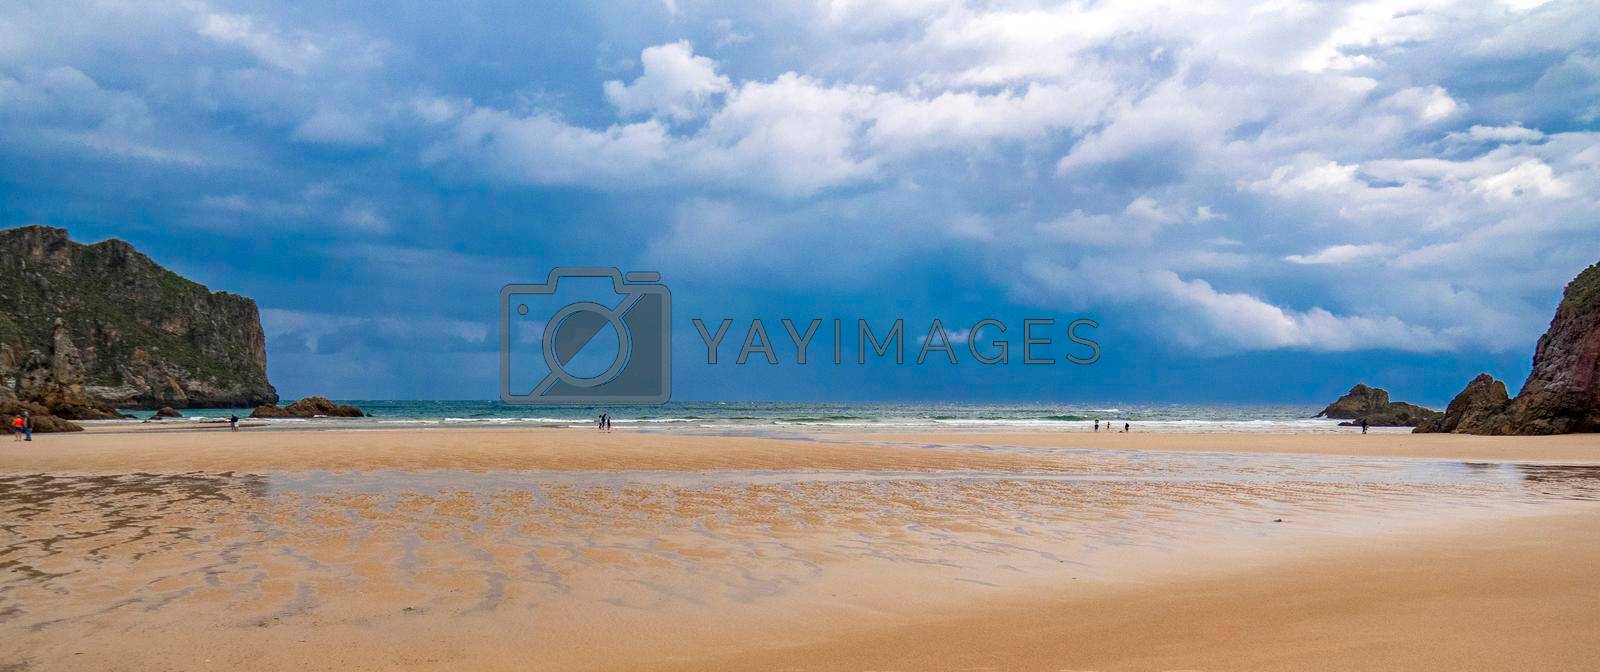 Royalty free image of Beach of La Franca, La Franca, Spain  by alcaproac